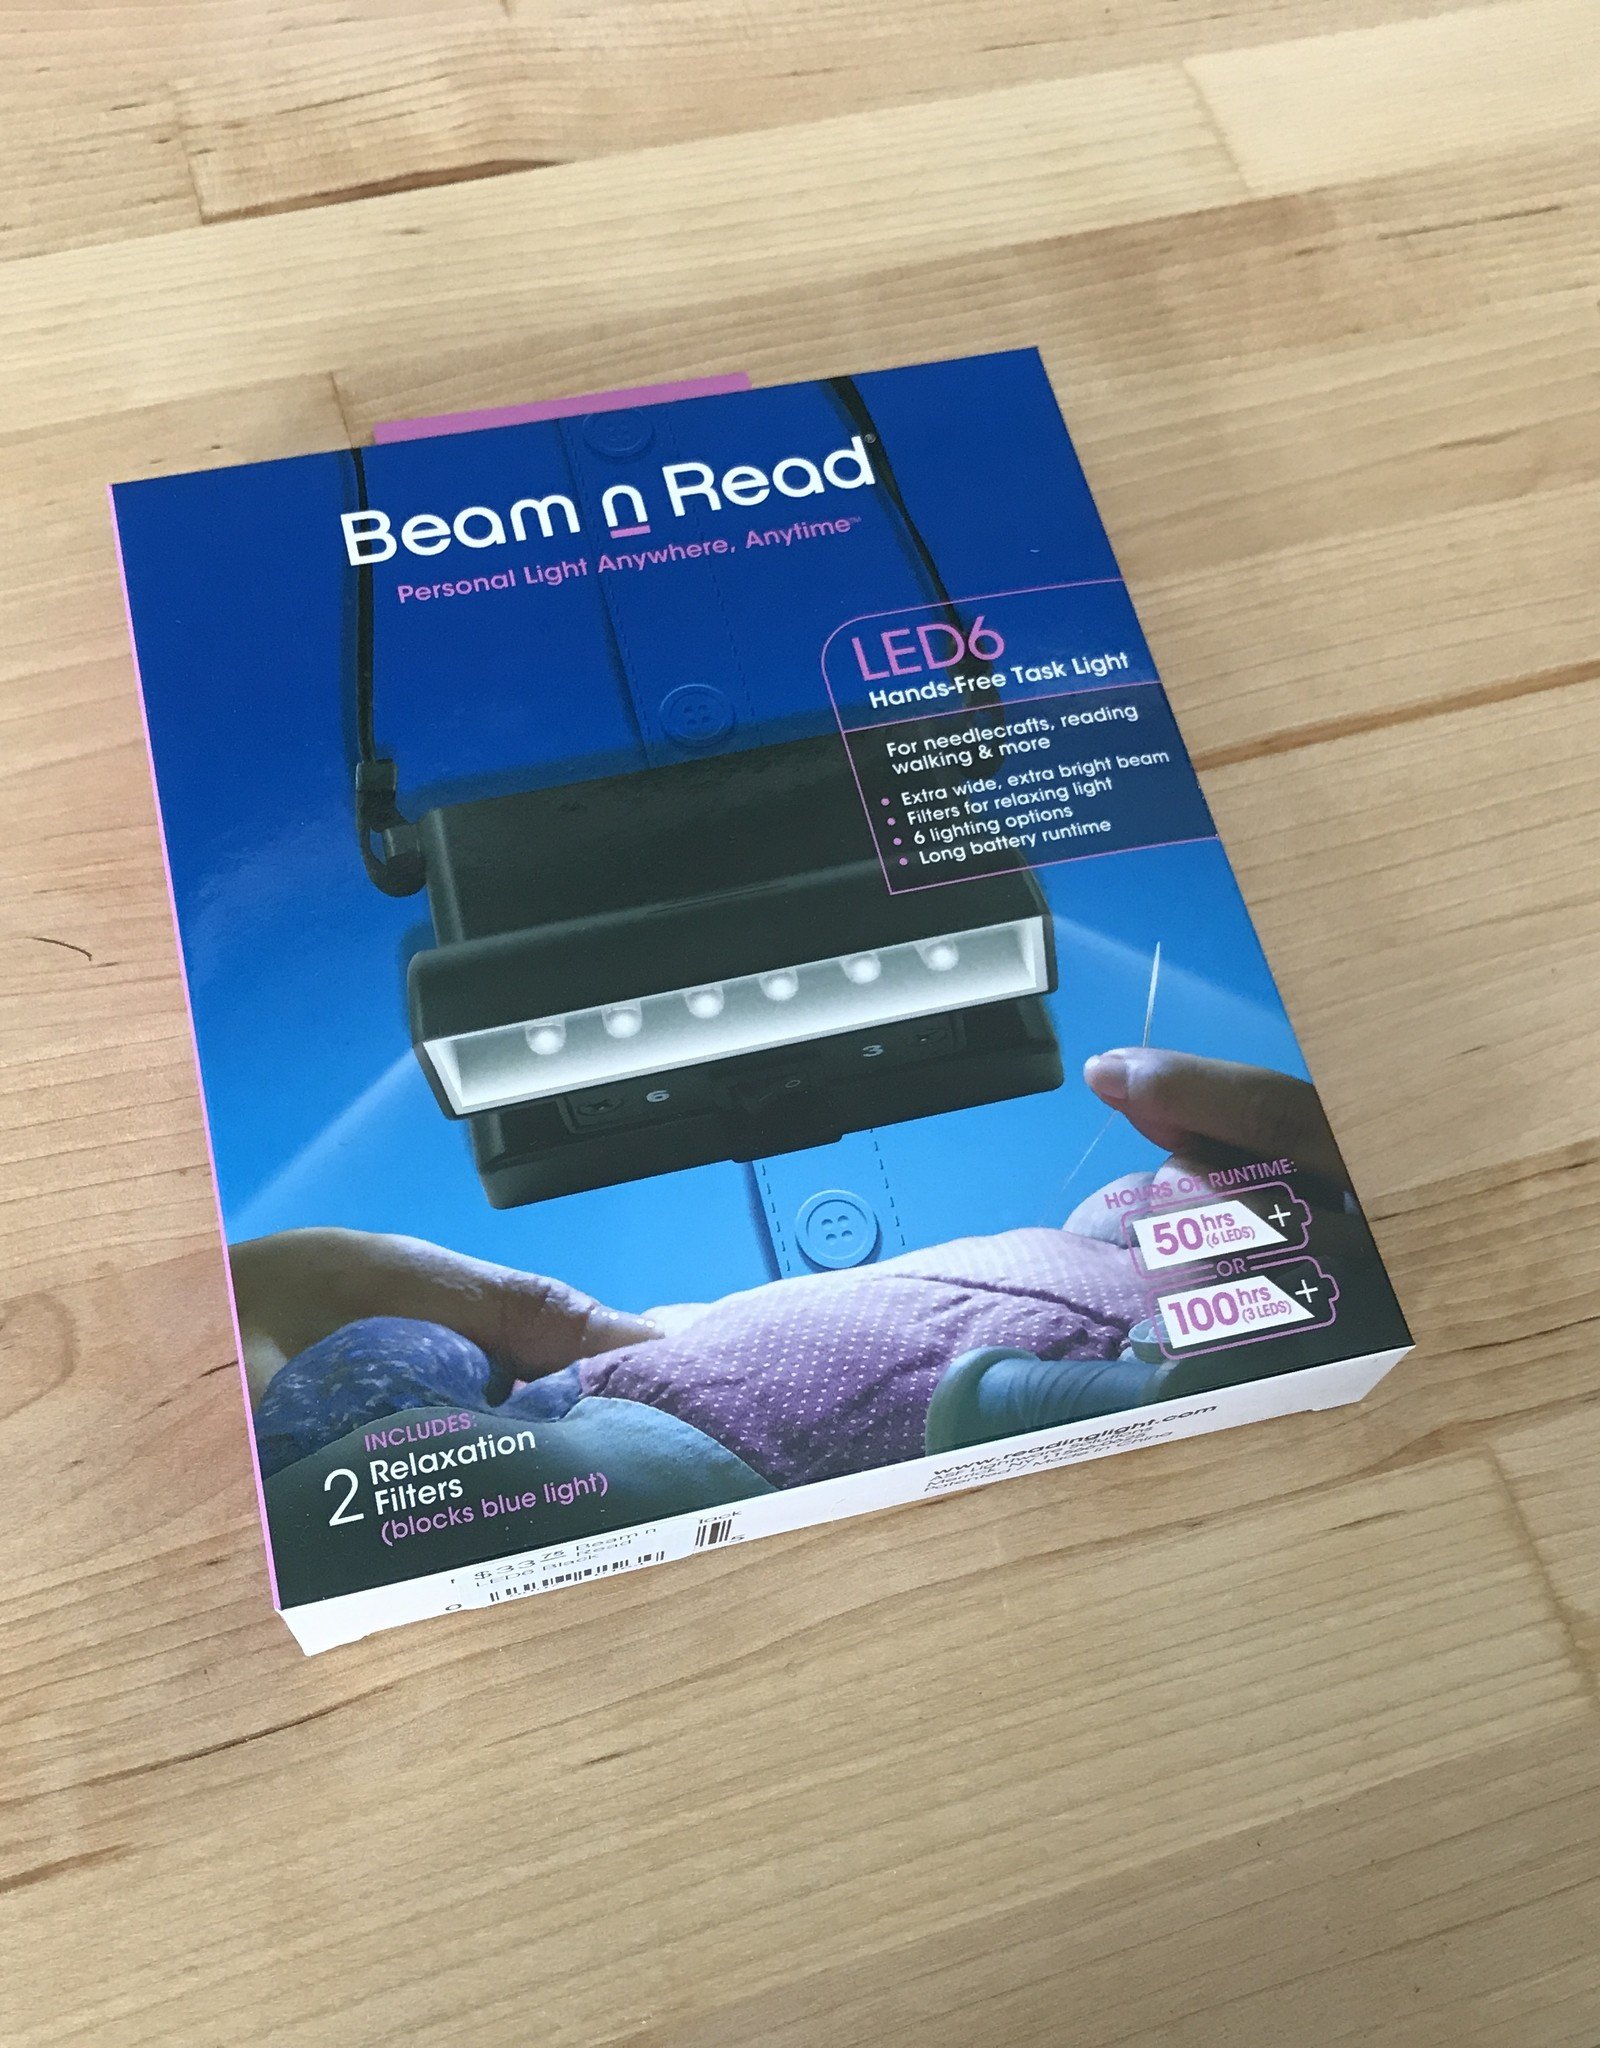 Beam n Read Beam n Read LED6